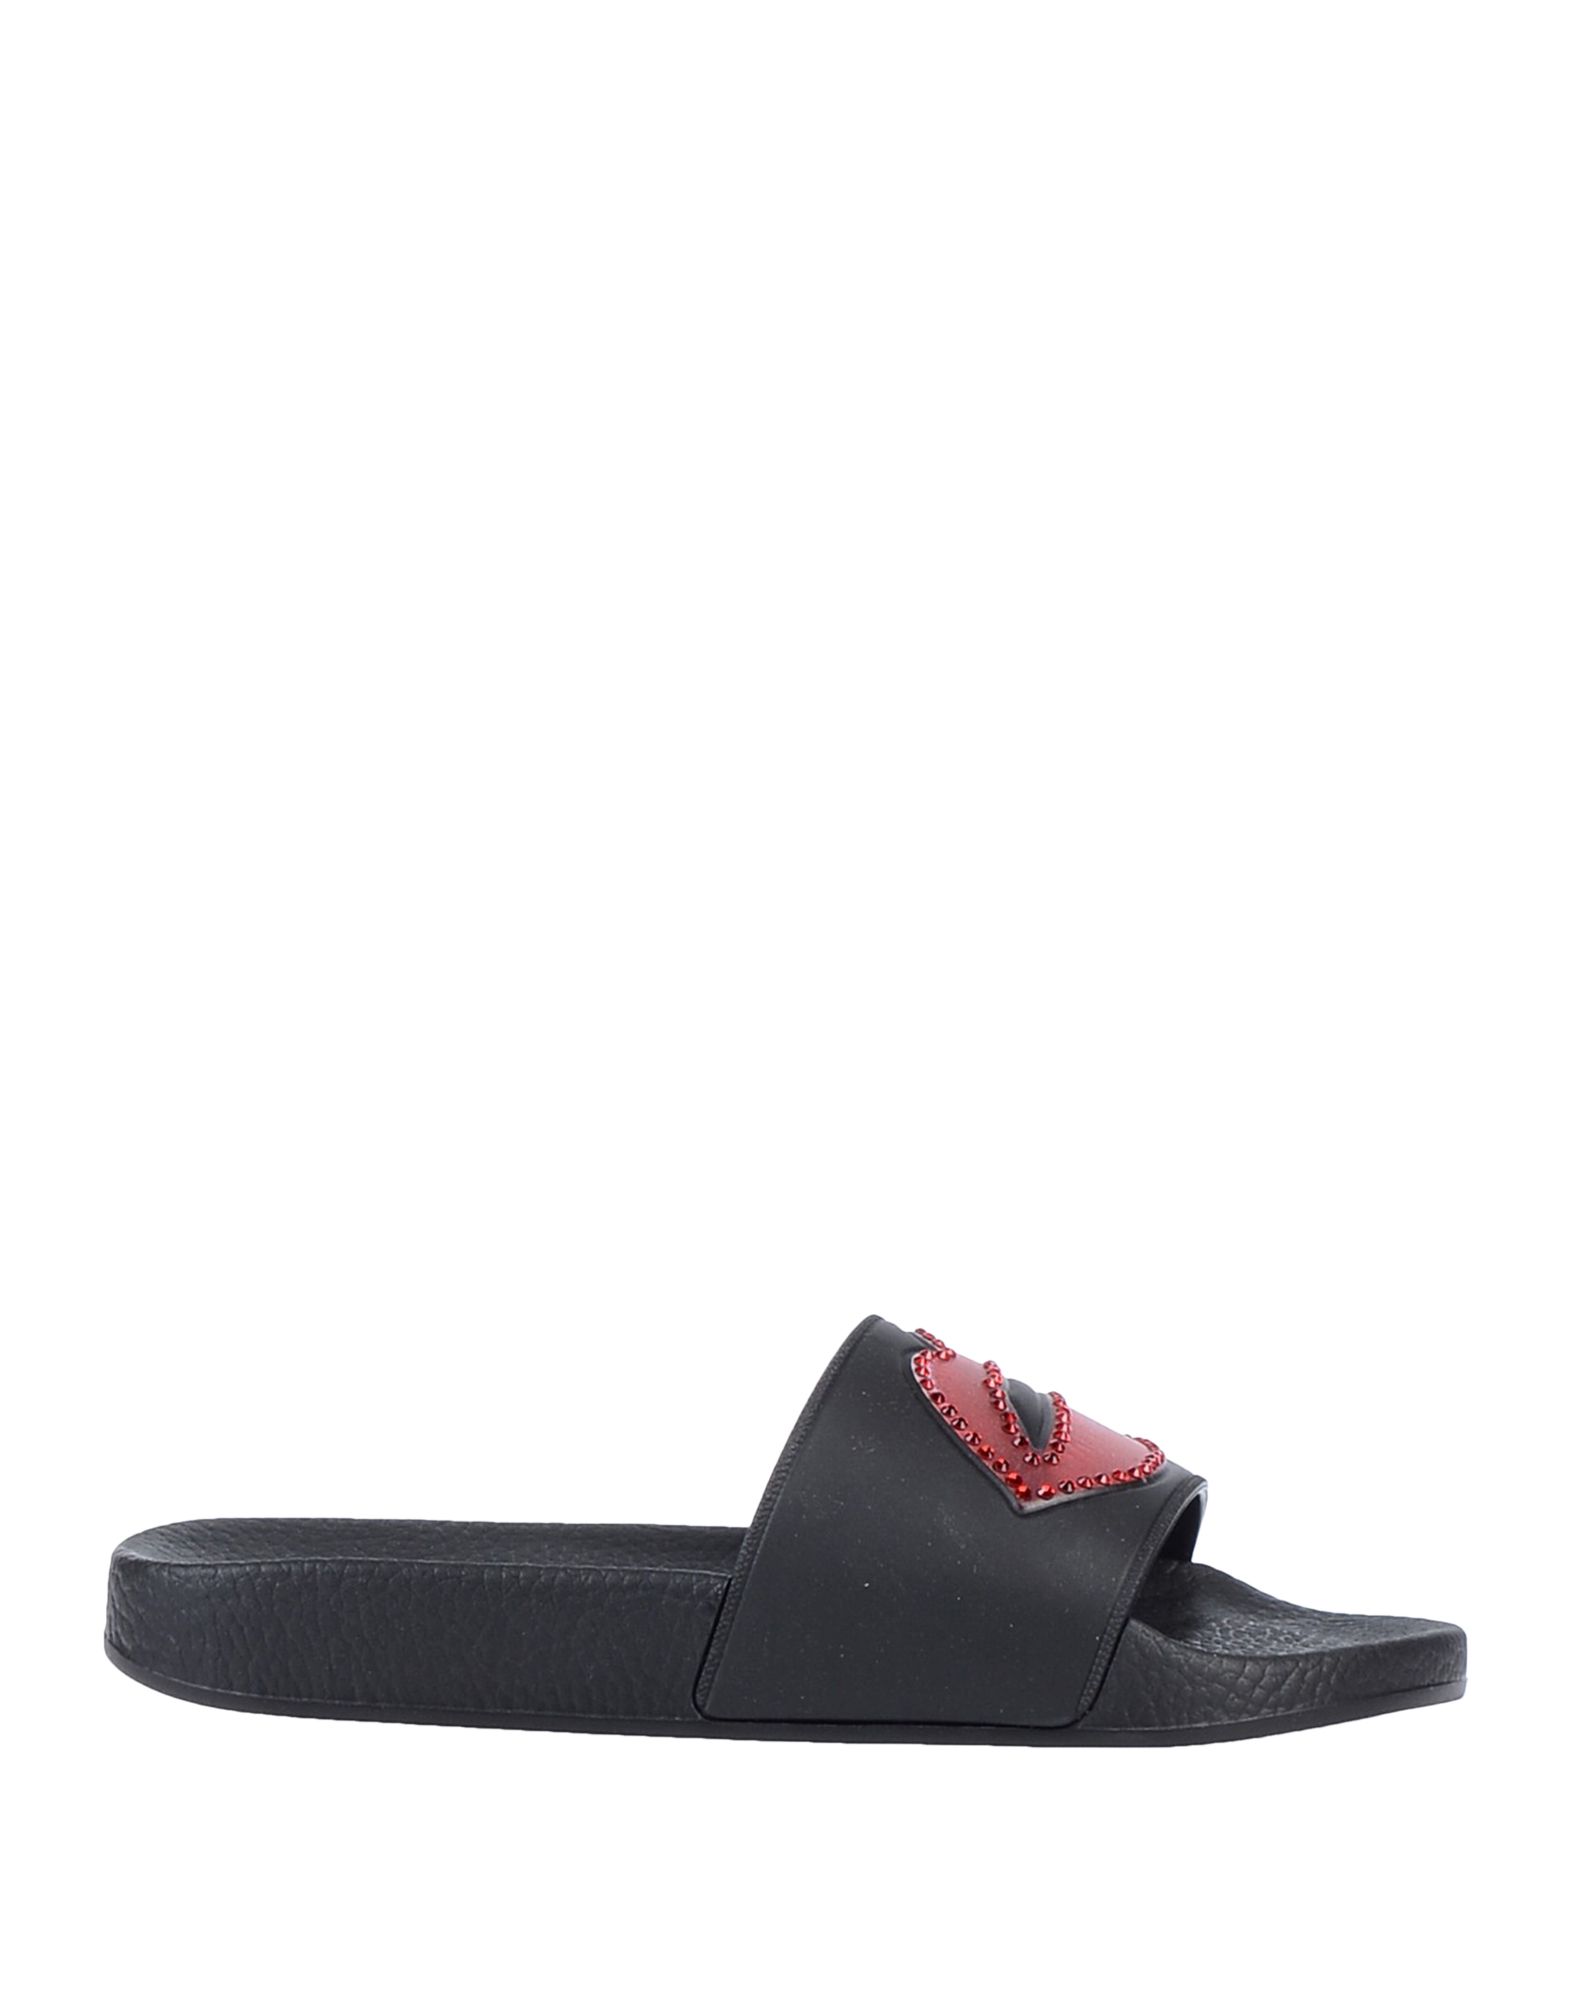 Menghi Sandals In Black